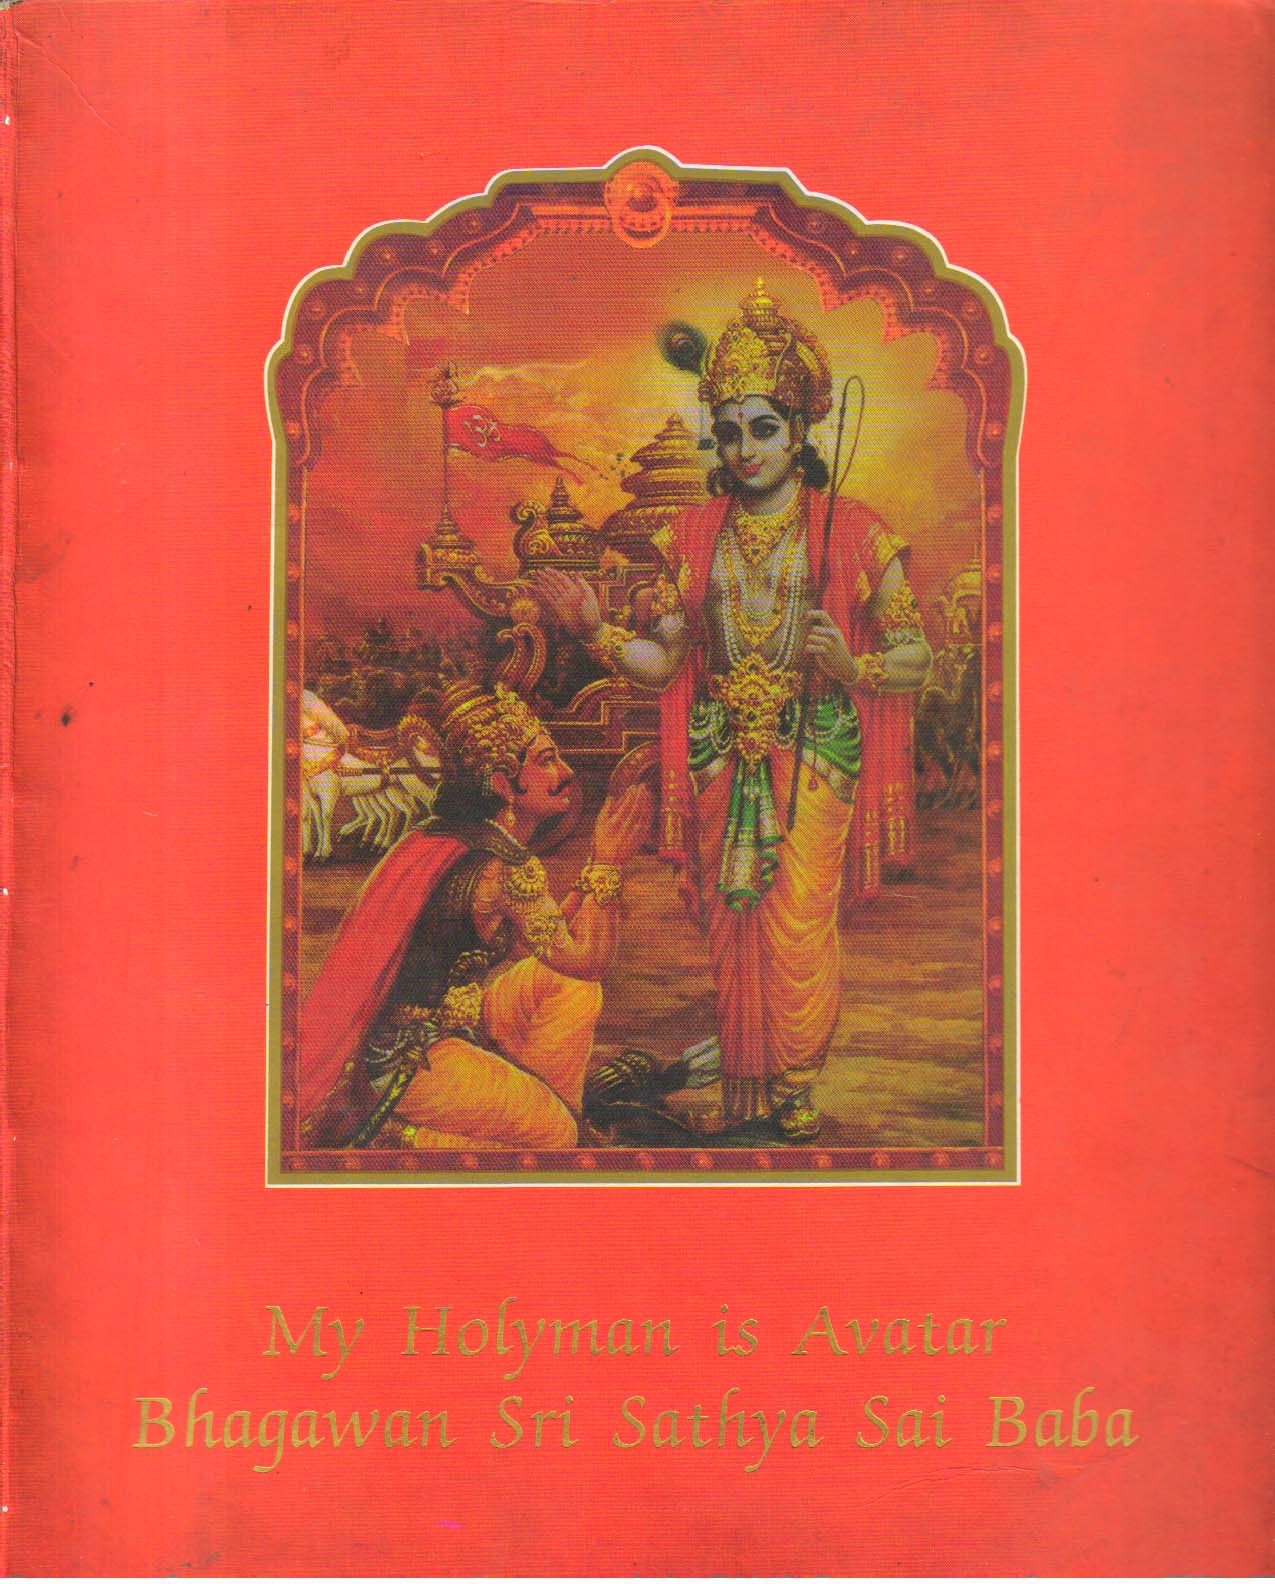 My Holyman is Avatar Bhagawan Sri Sathya Sai Baba